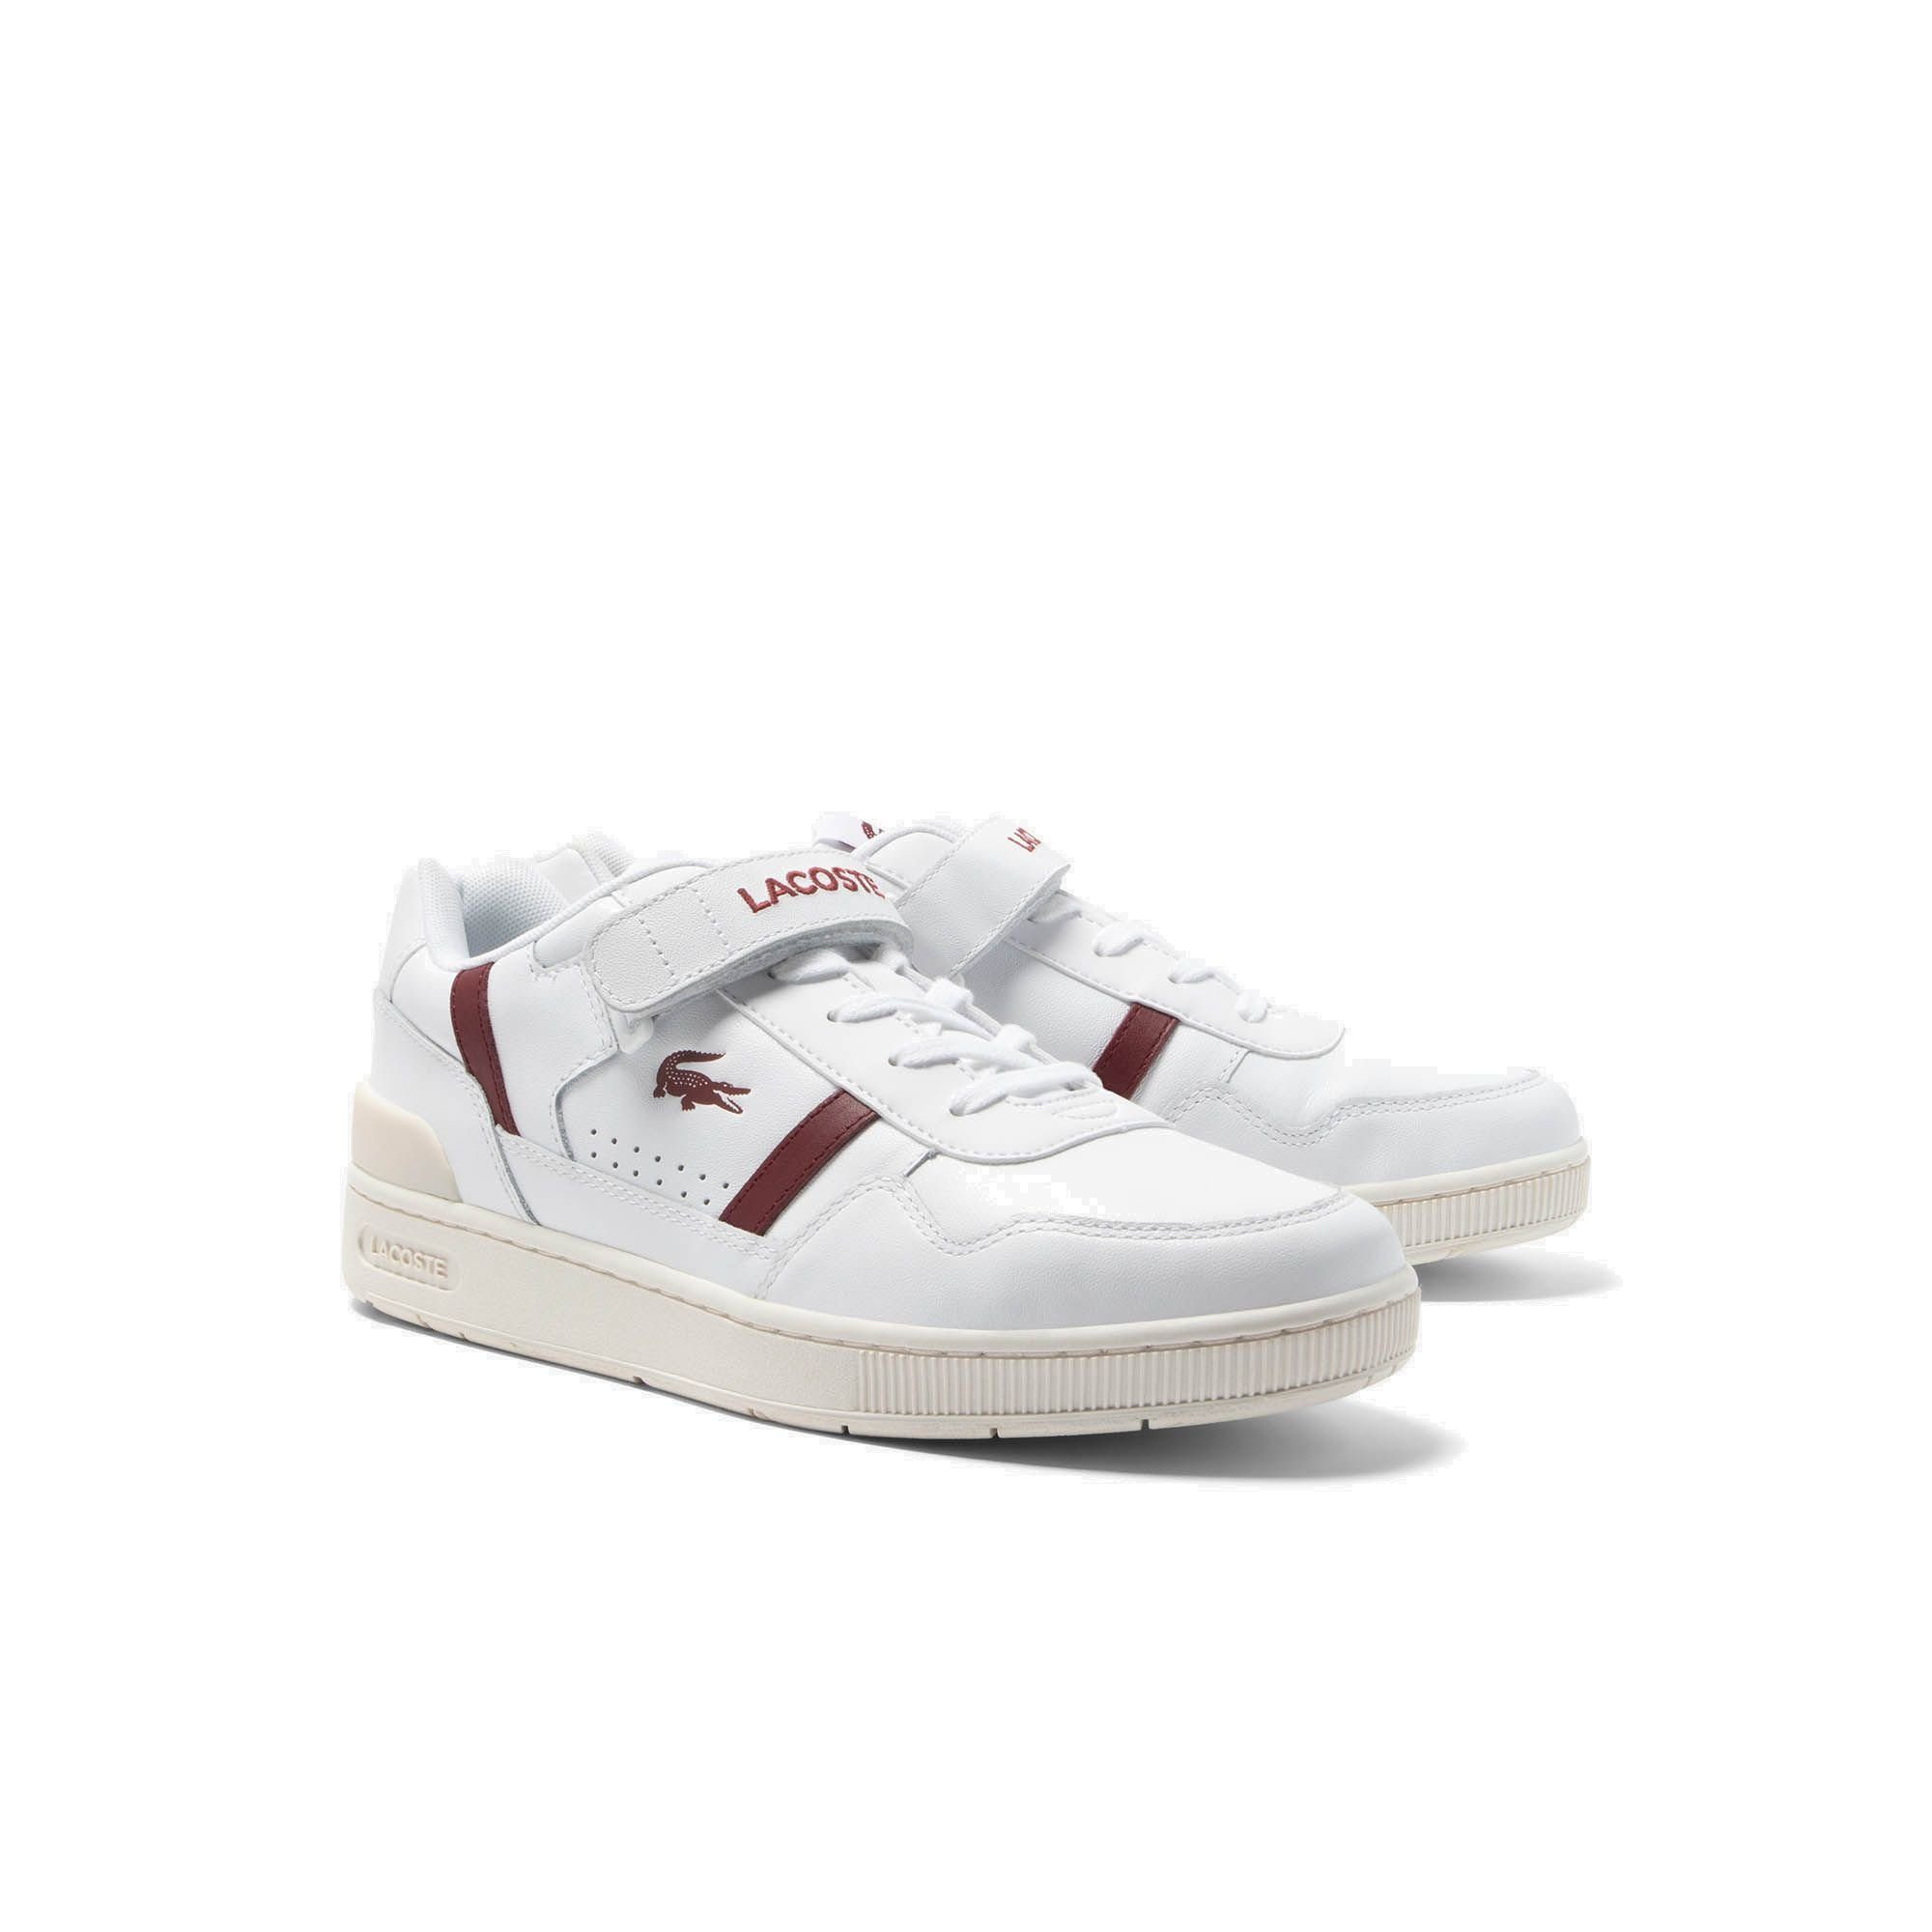 WEISS/DUNKELROT Sneaker (2G1) Lacoste